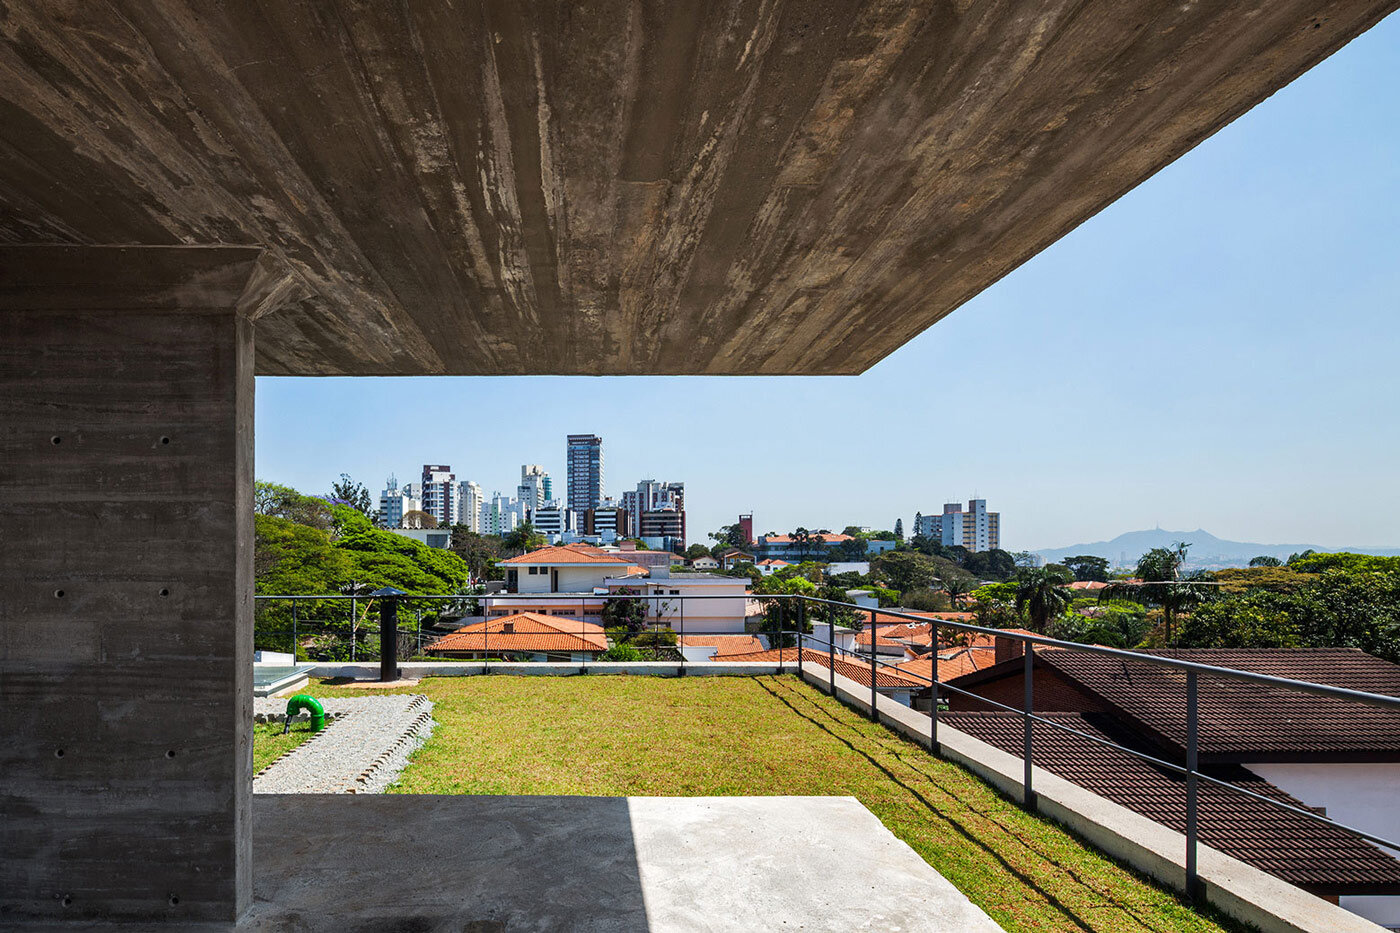 Architecture and interior design for freshness and positive emotion Pepiguari Home by Brasil Arquitetura - www.homeworlddesign. com (21)